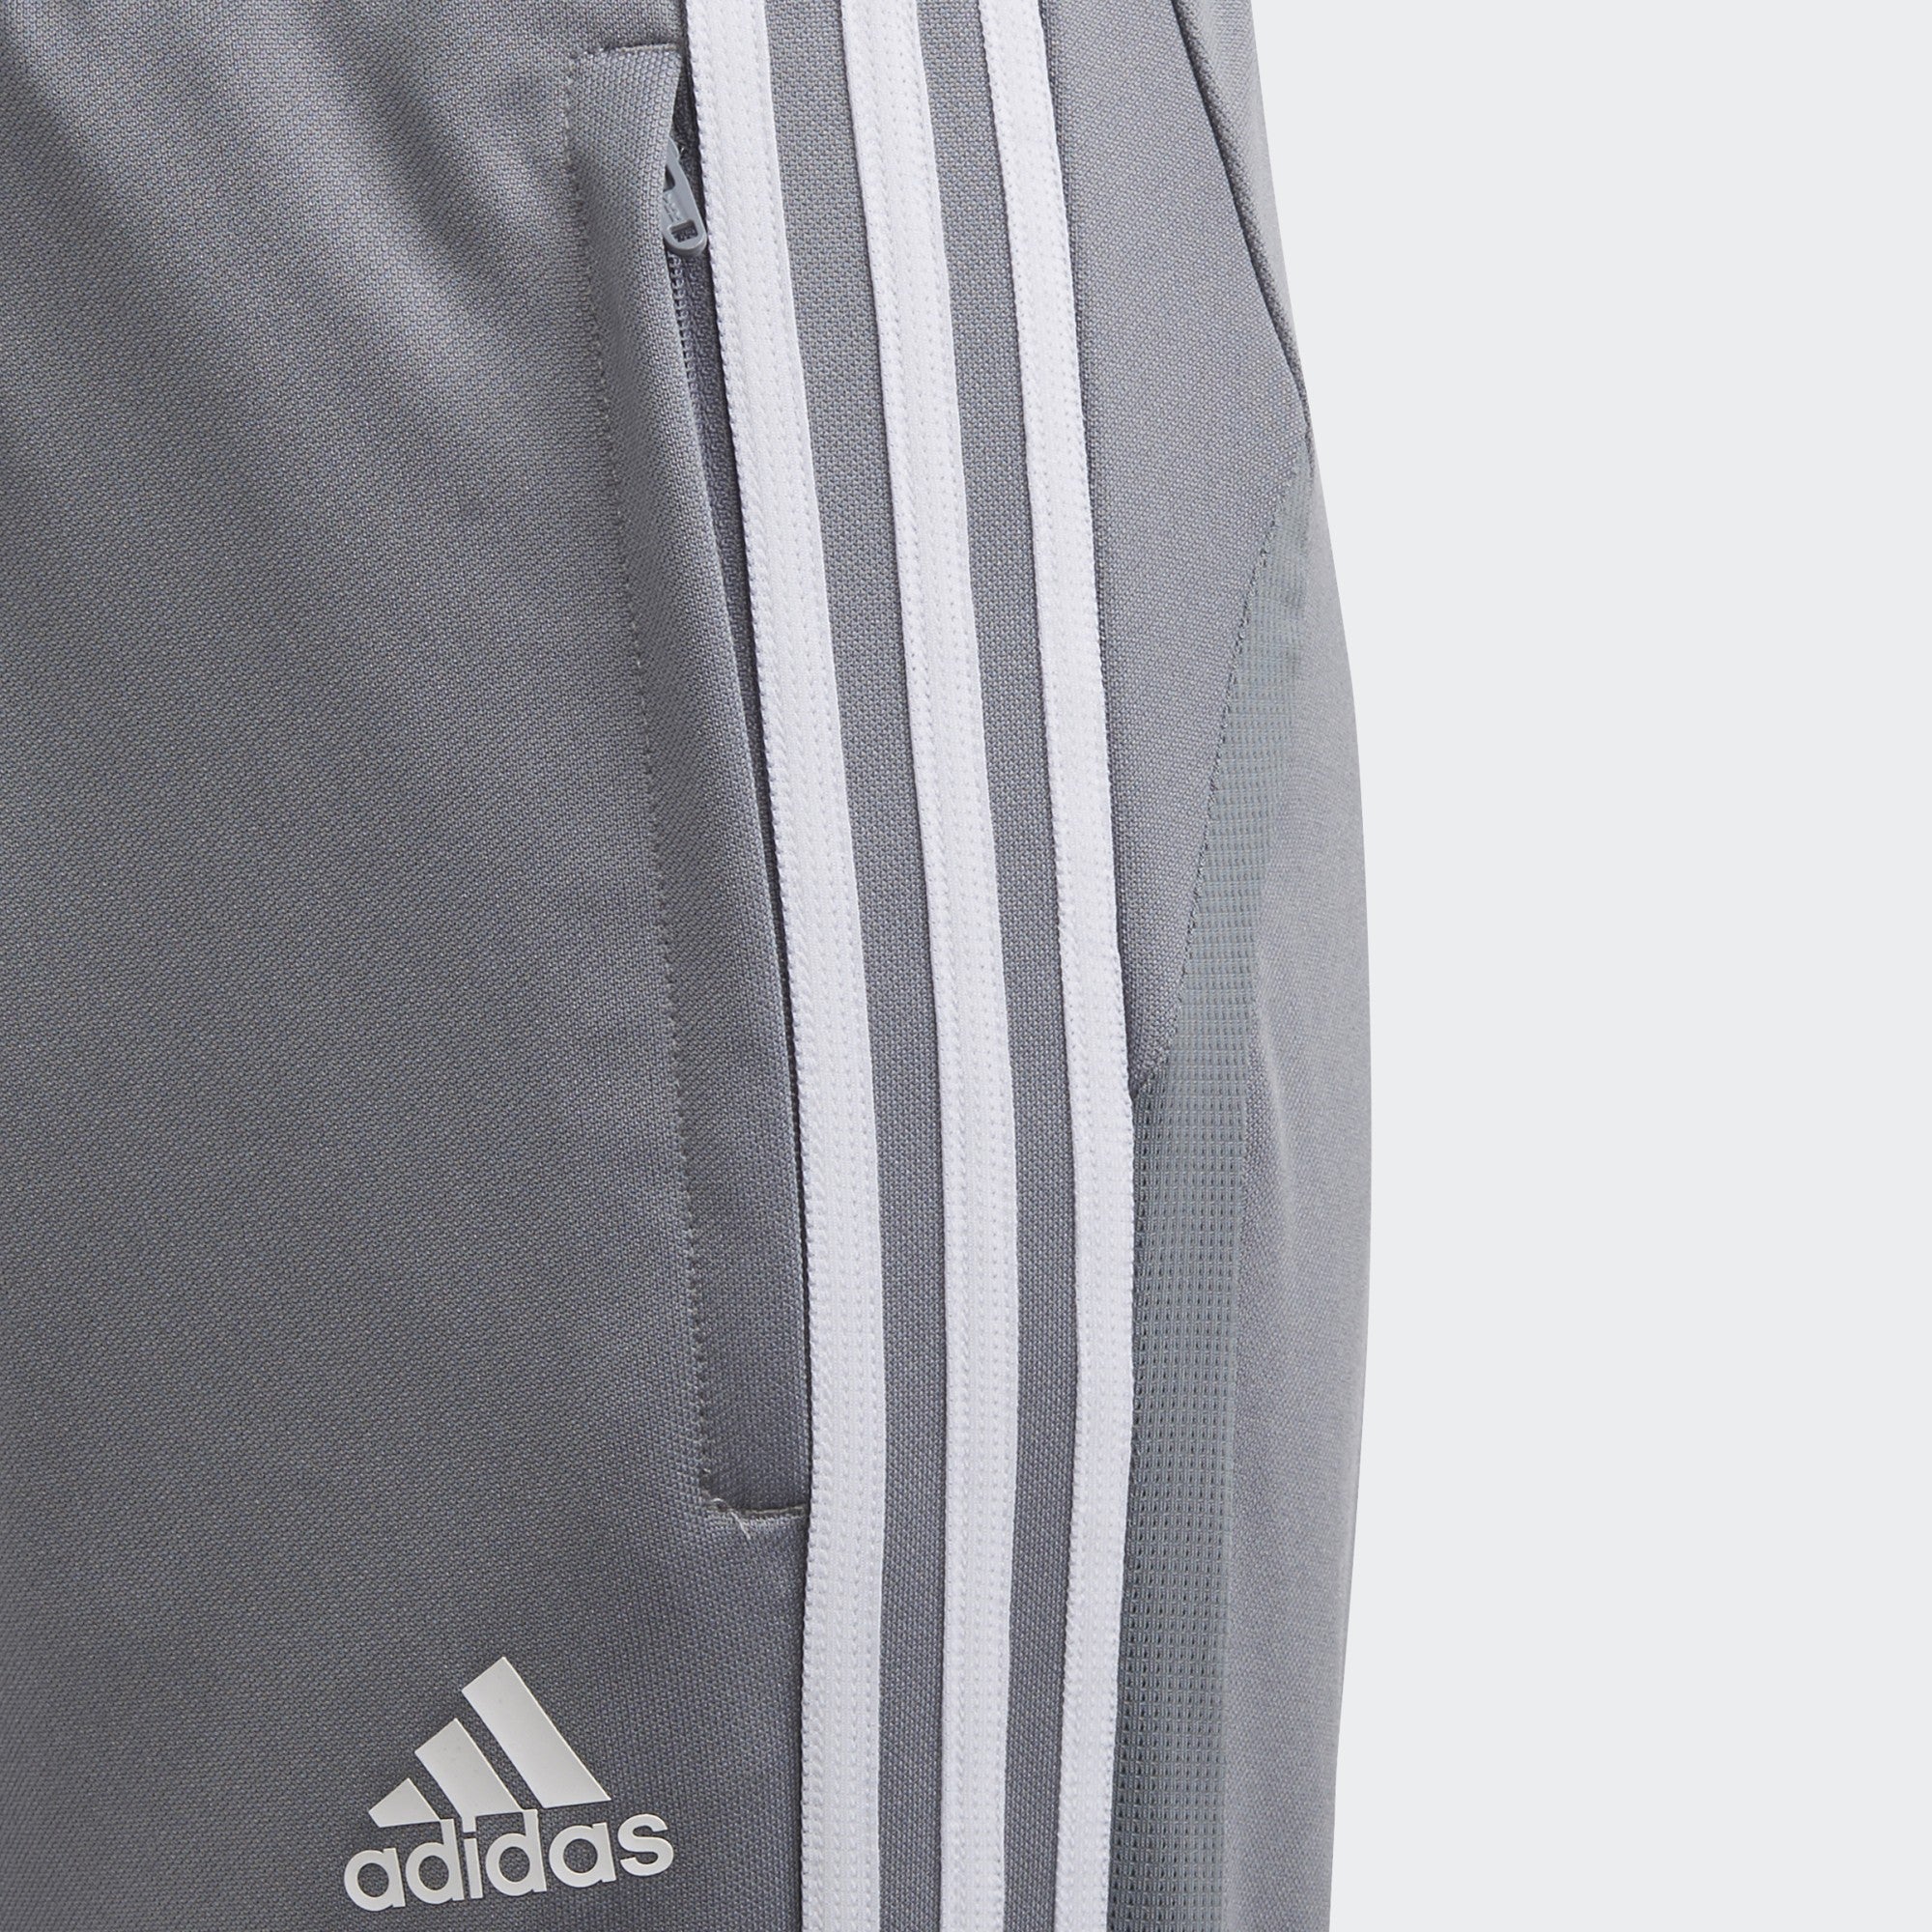 Adidas Tiro 19 Youth Training Pants in Black/White — DiscoSports